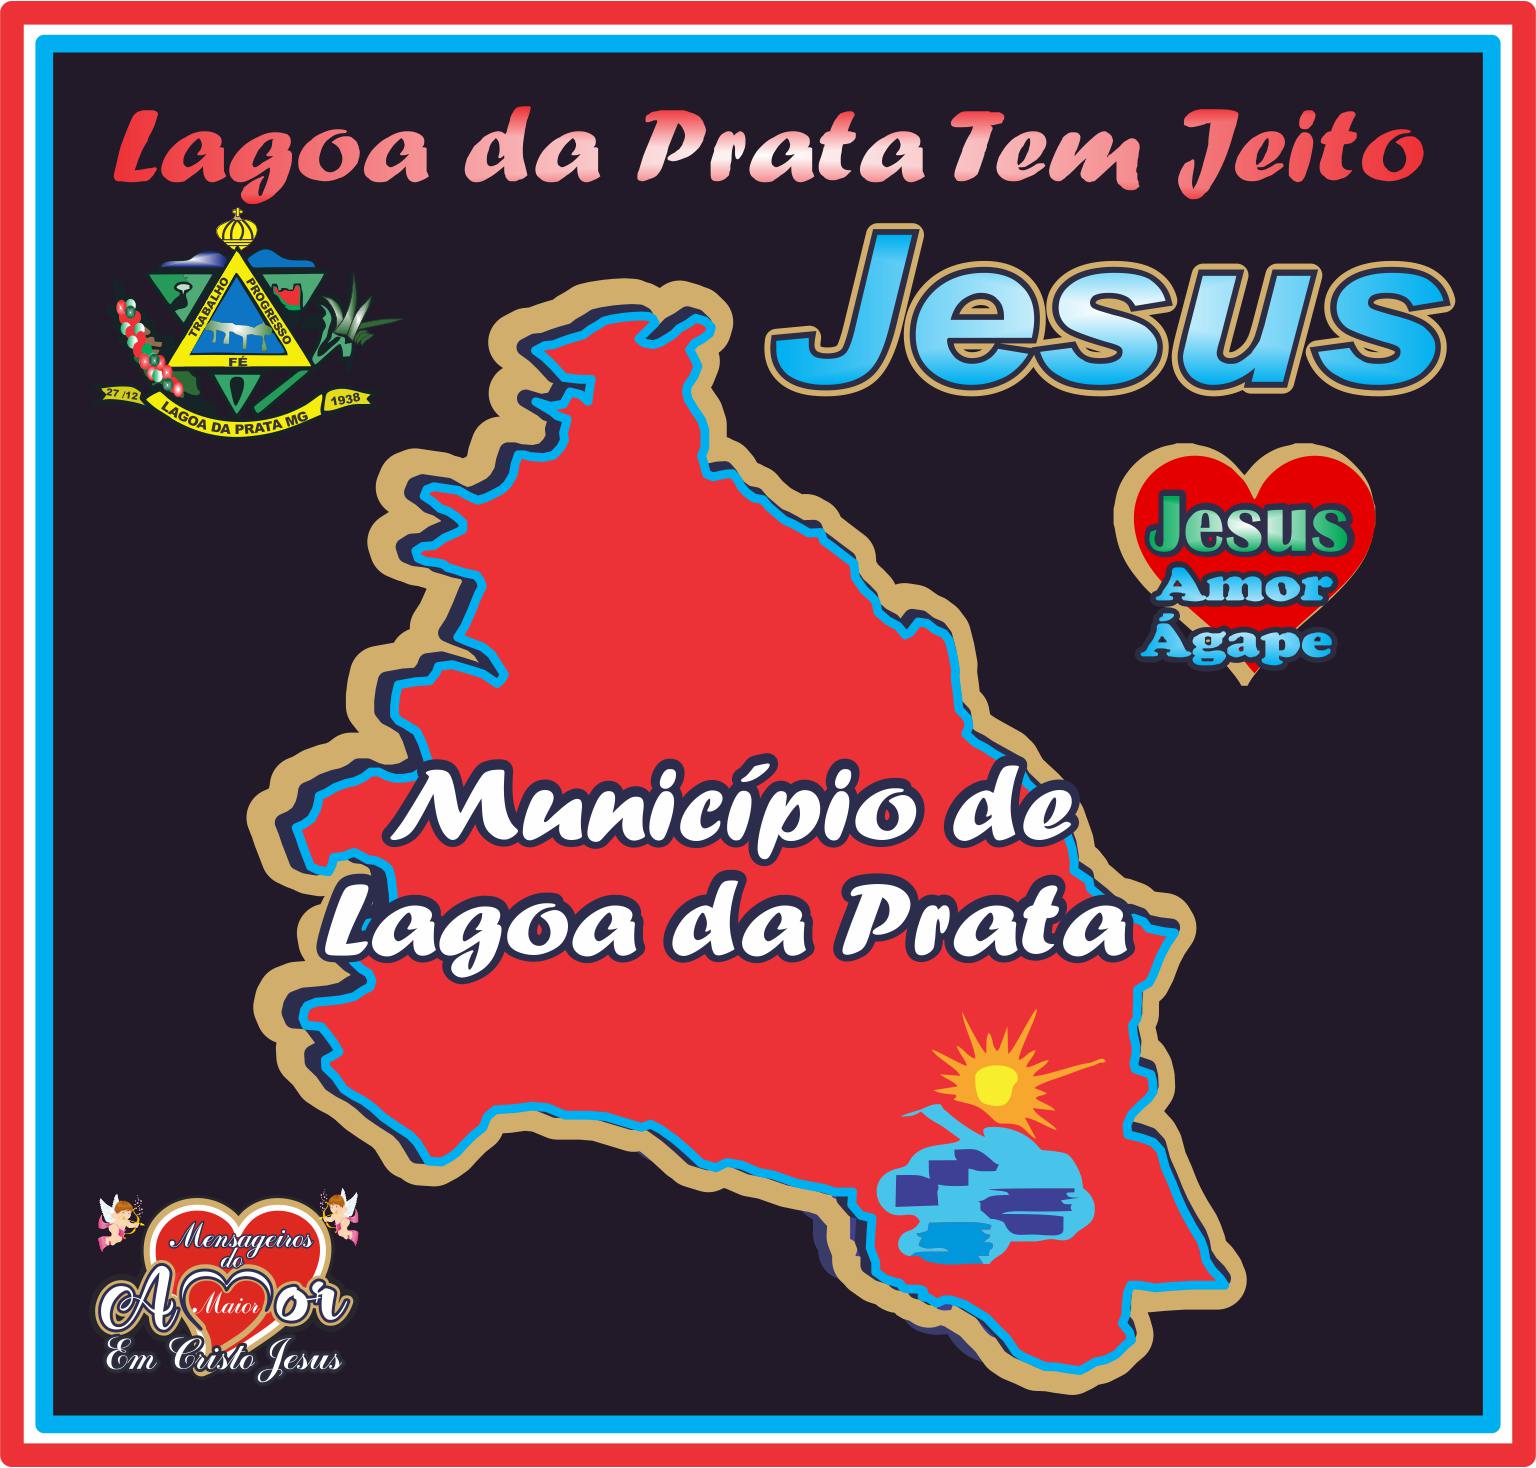 Lagoa da Prata Tem Jeito Jesus